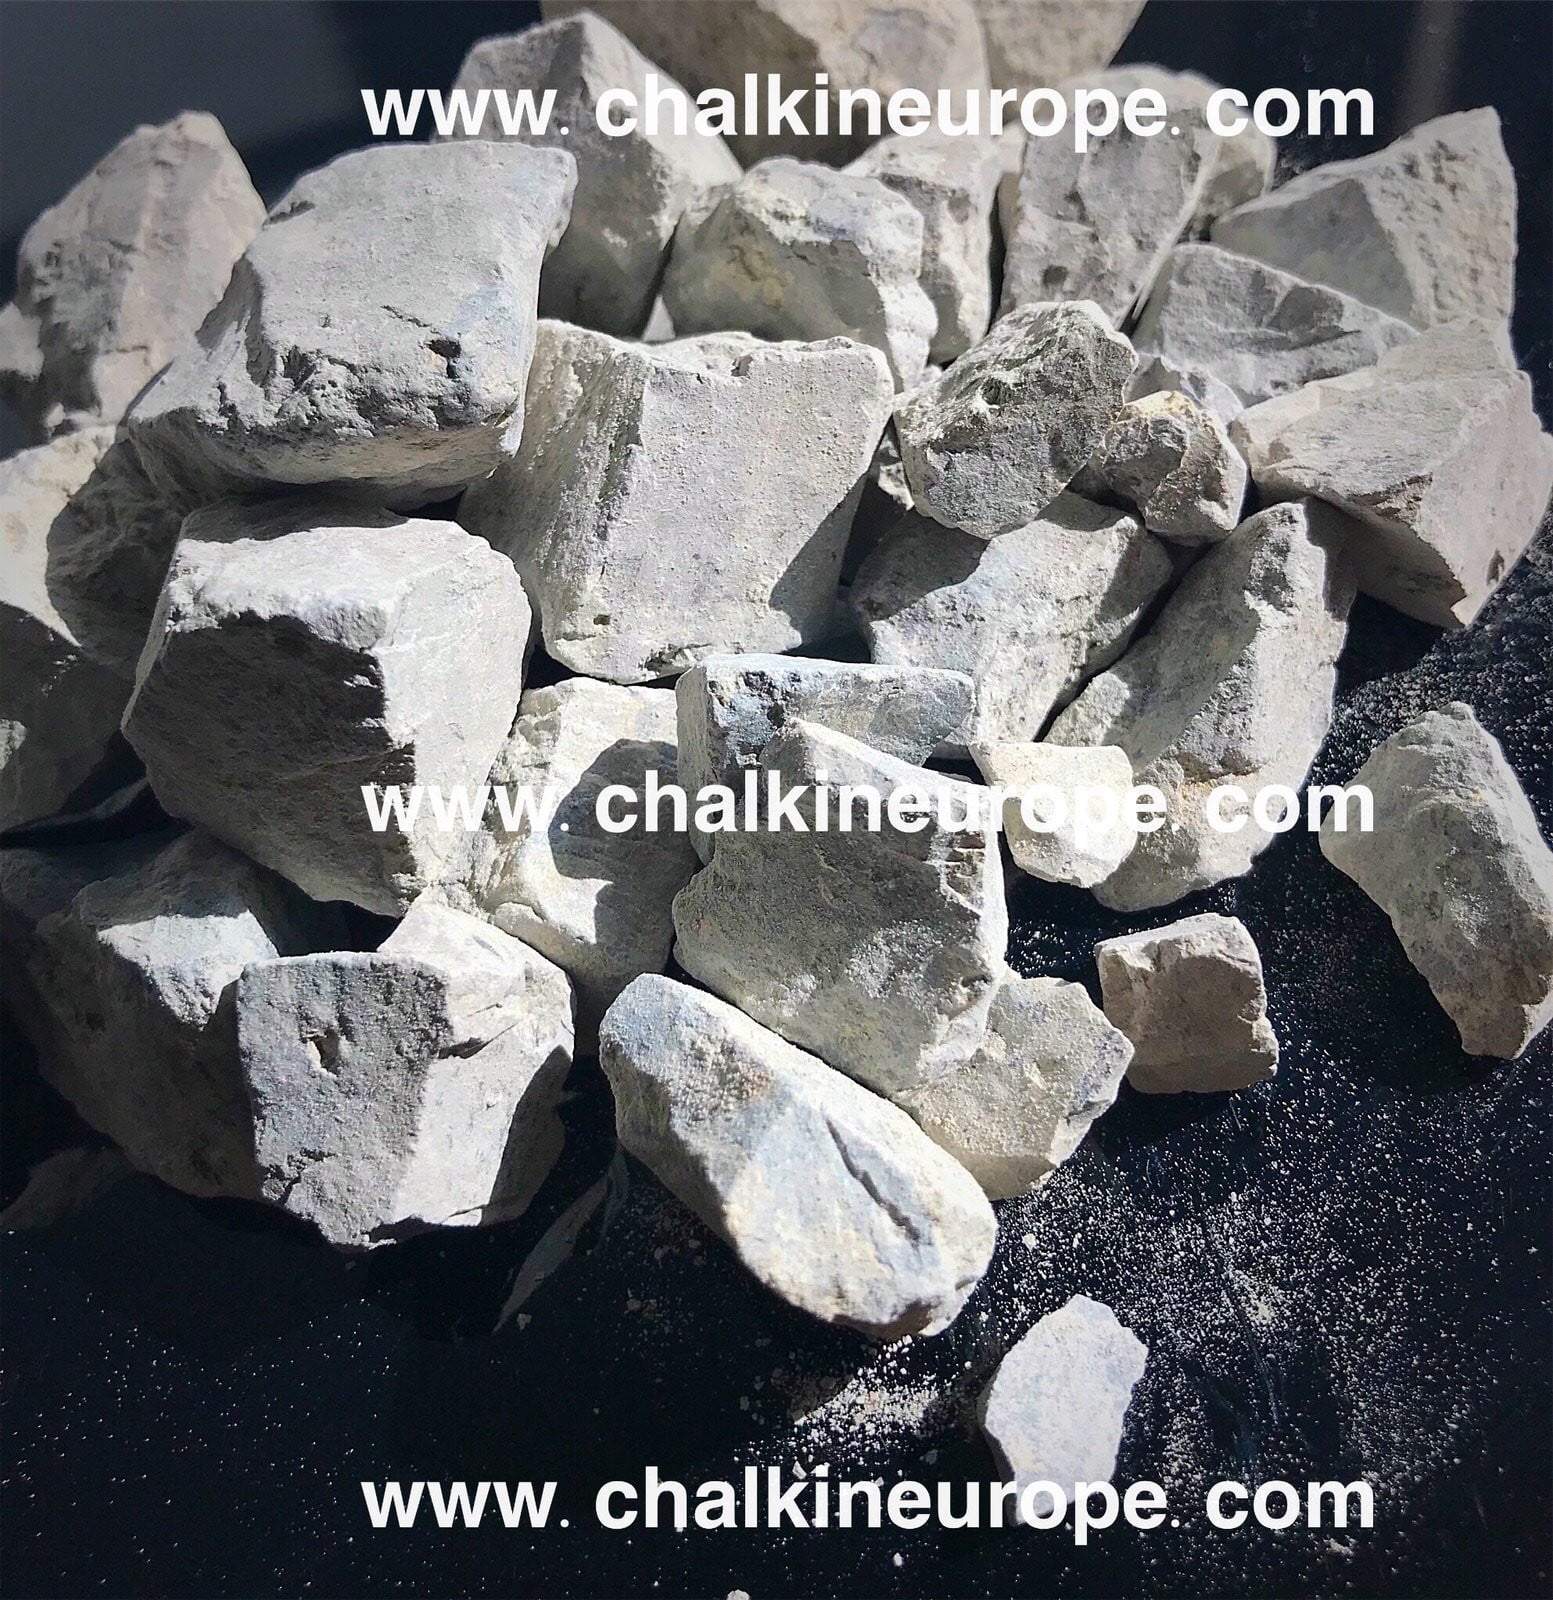 Argila asiática cinza / cinza - Chalkineurope